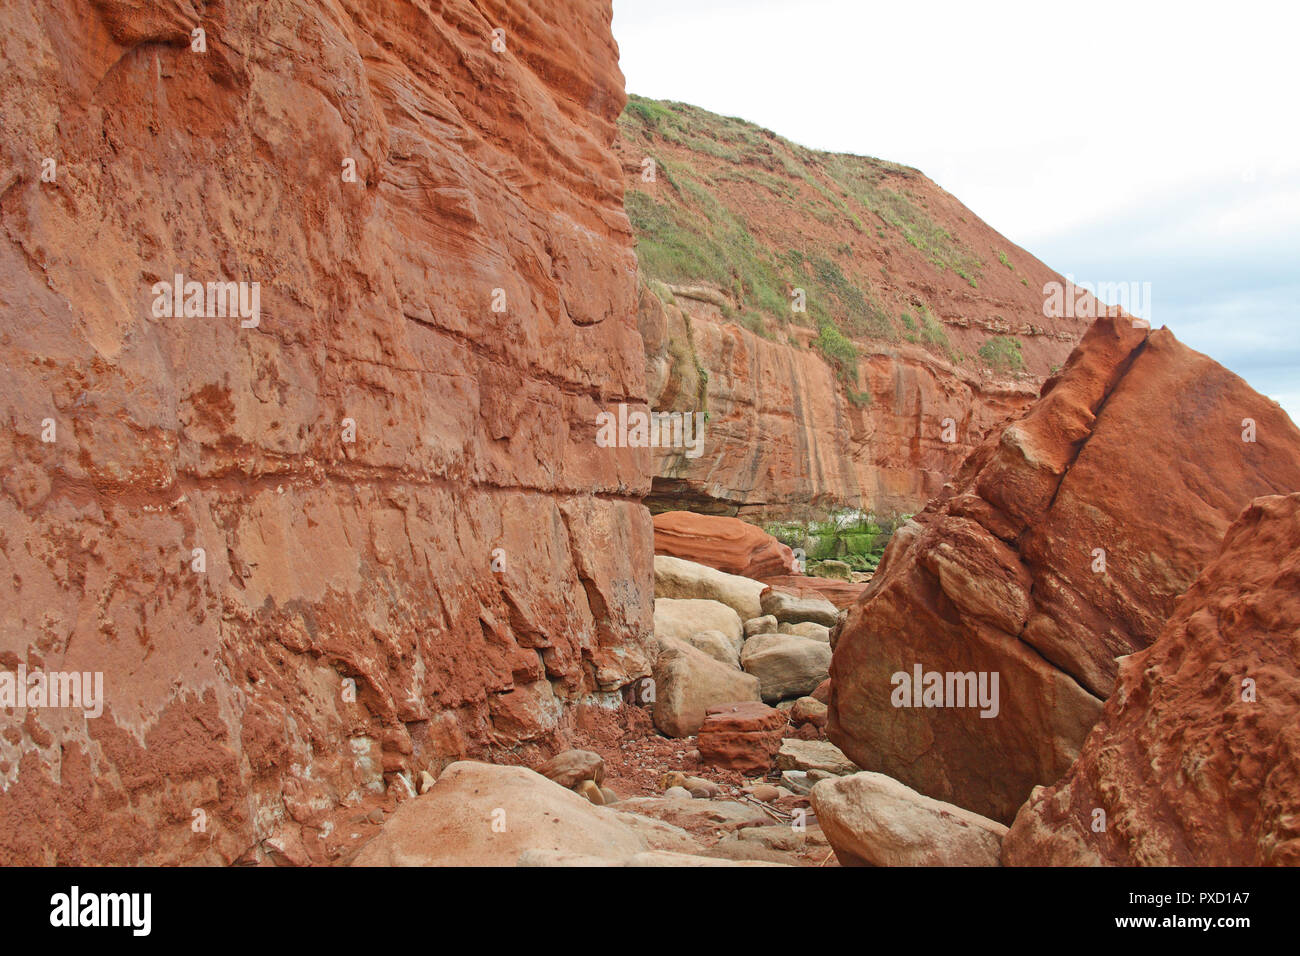 Triassic desert sandstones and mudstones, Orcombe Point, Exmouth, Devon, England, UK Stock Photo